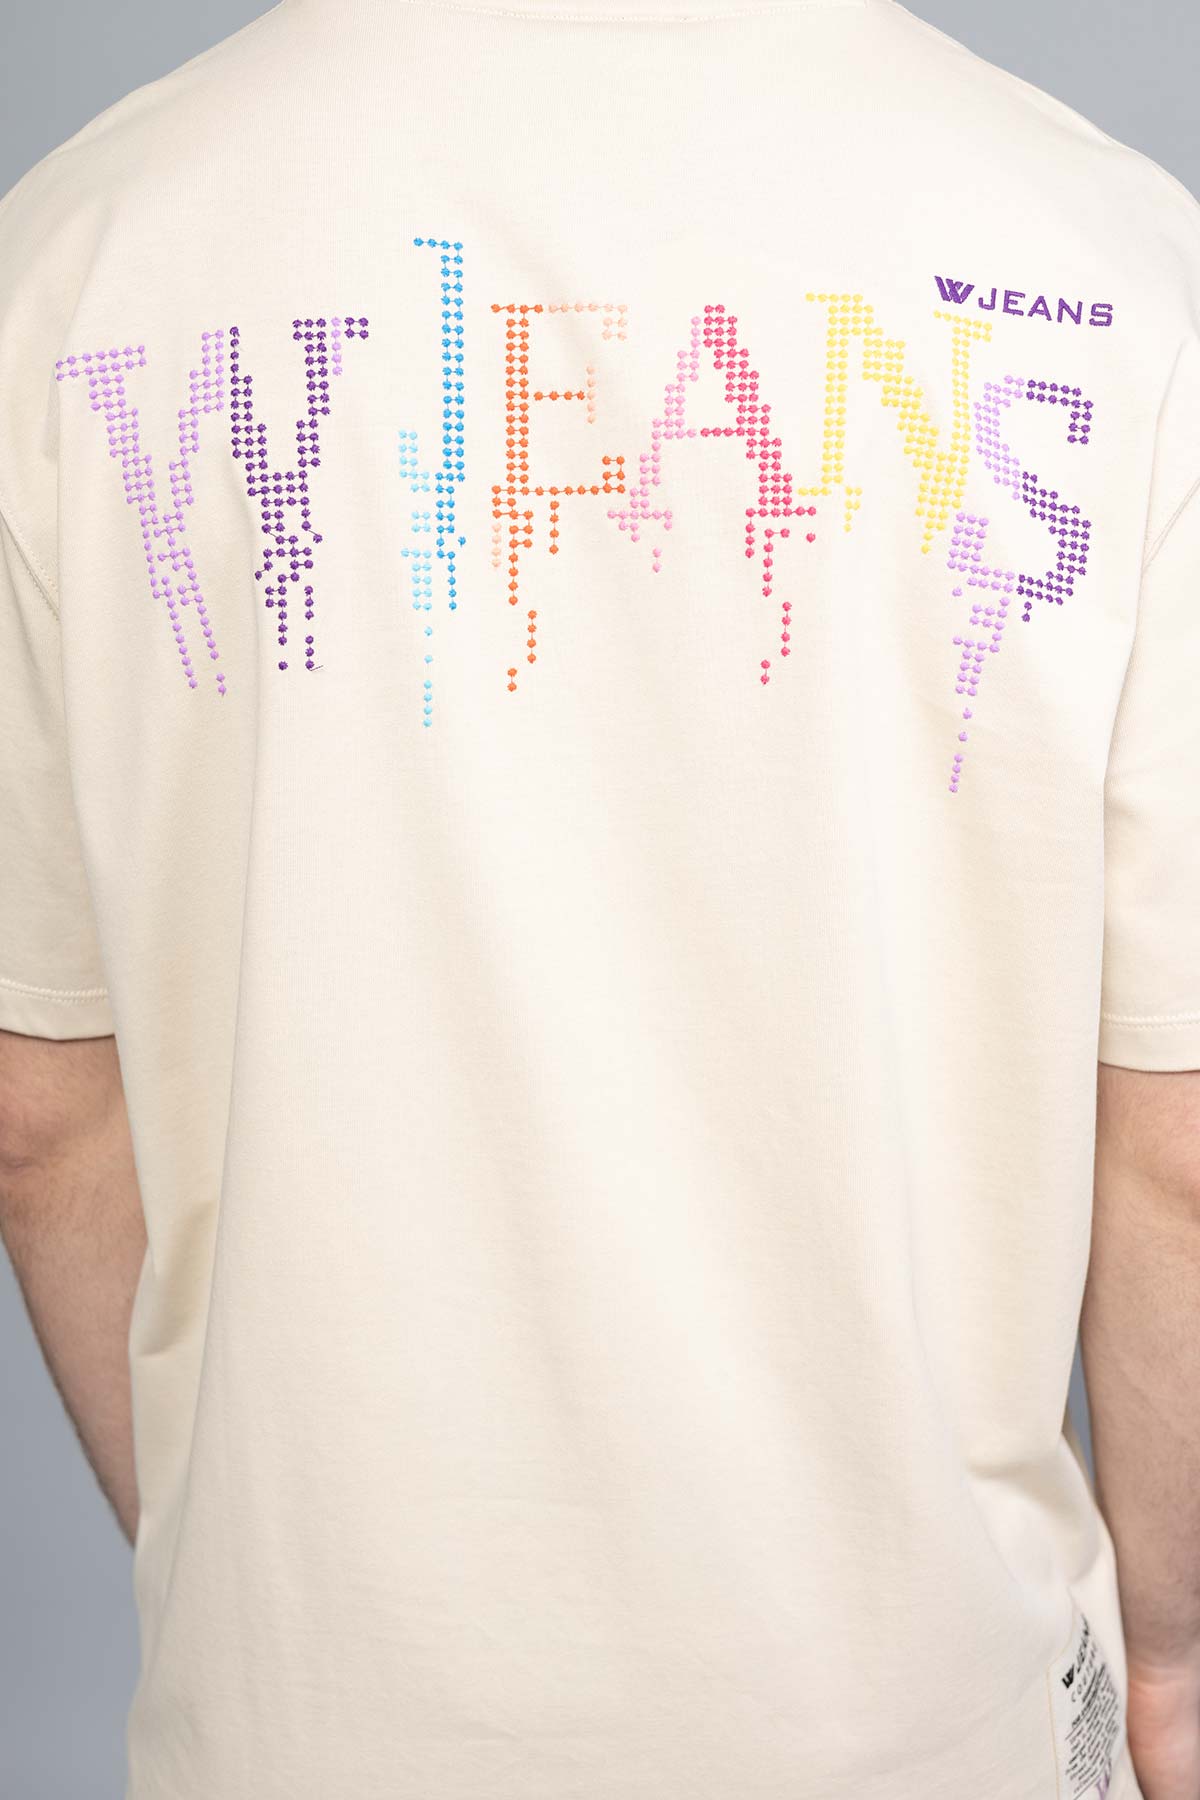 Wjeans חולצת טישירט אובר סייז Cubes בצבע שמנת לגברים-W Jeans-XS-נאקו